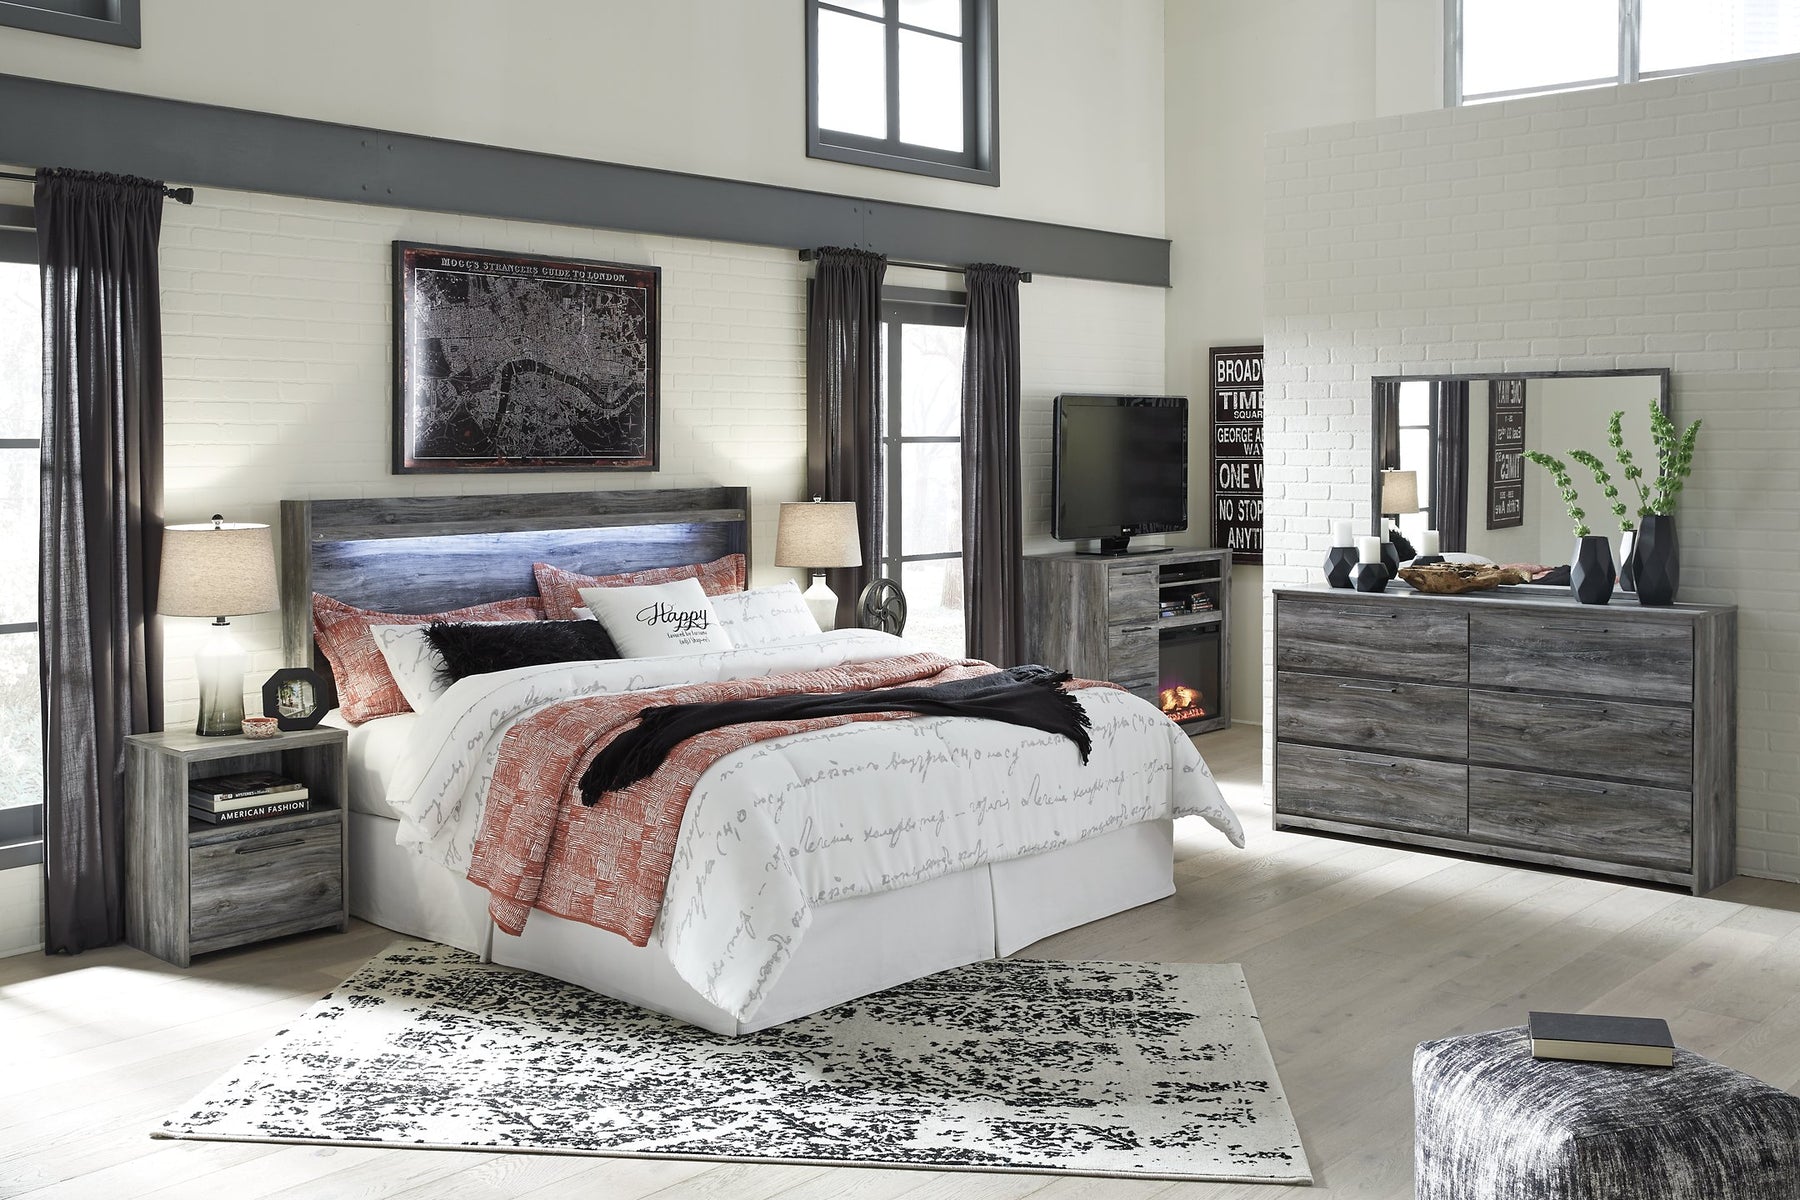 Baystorm Bed - Half Price Furniture